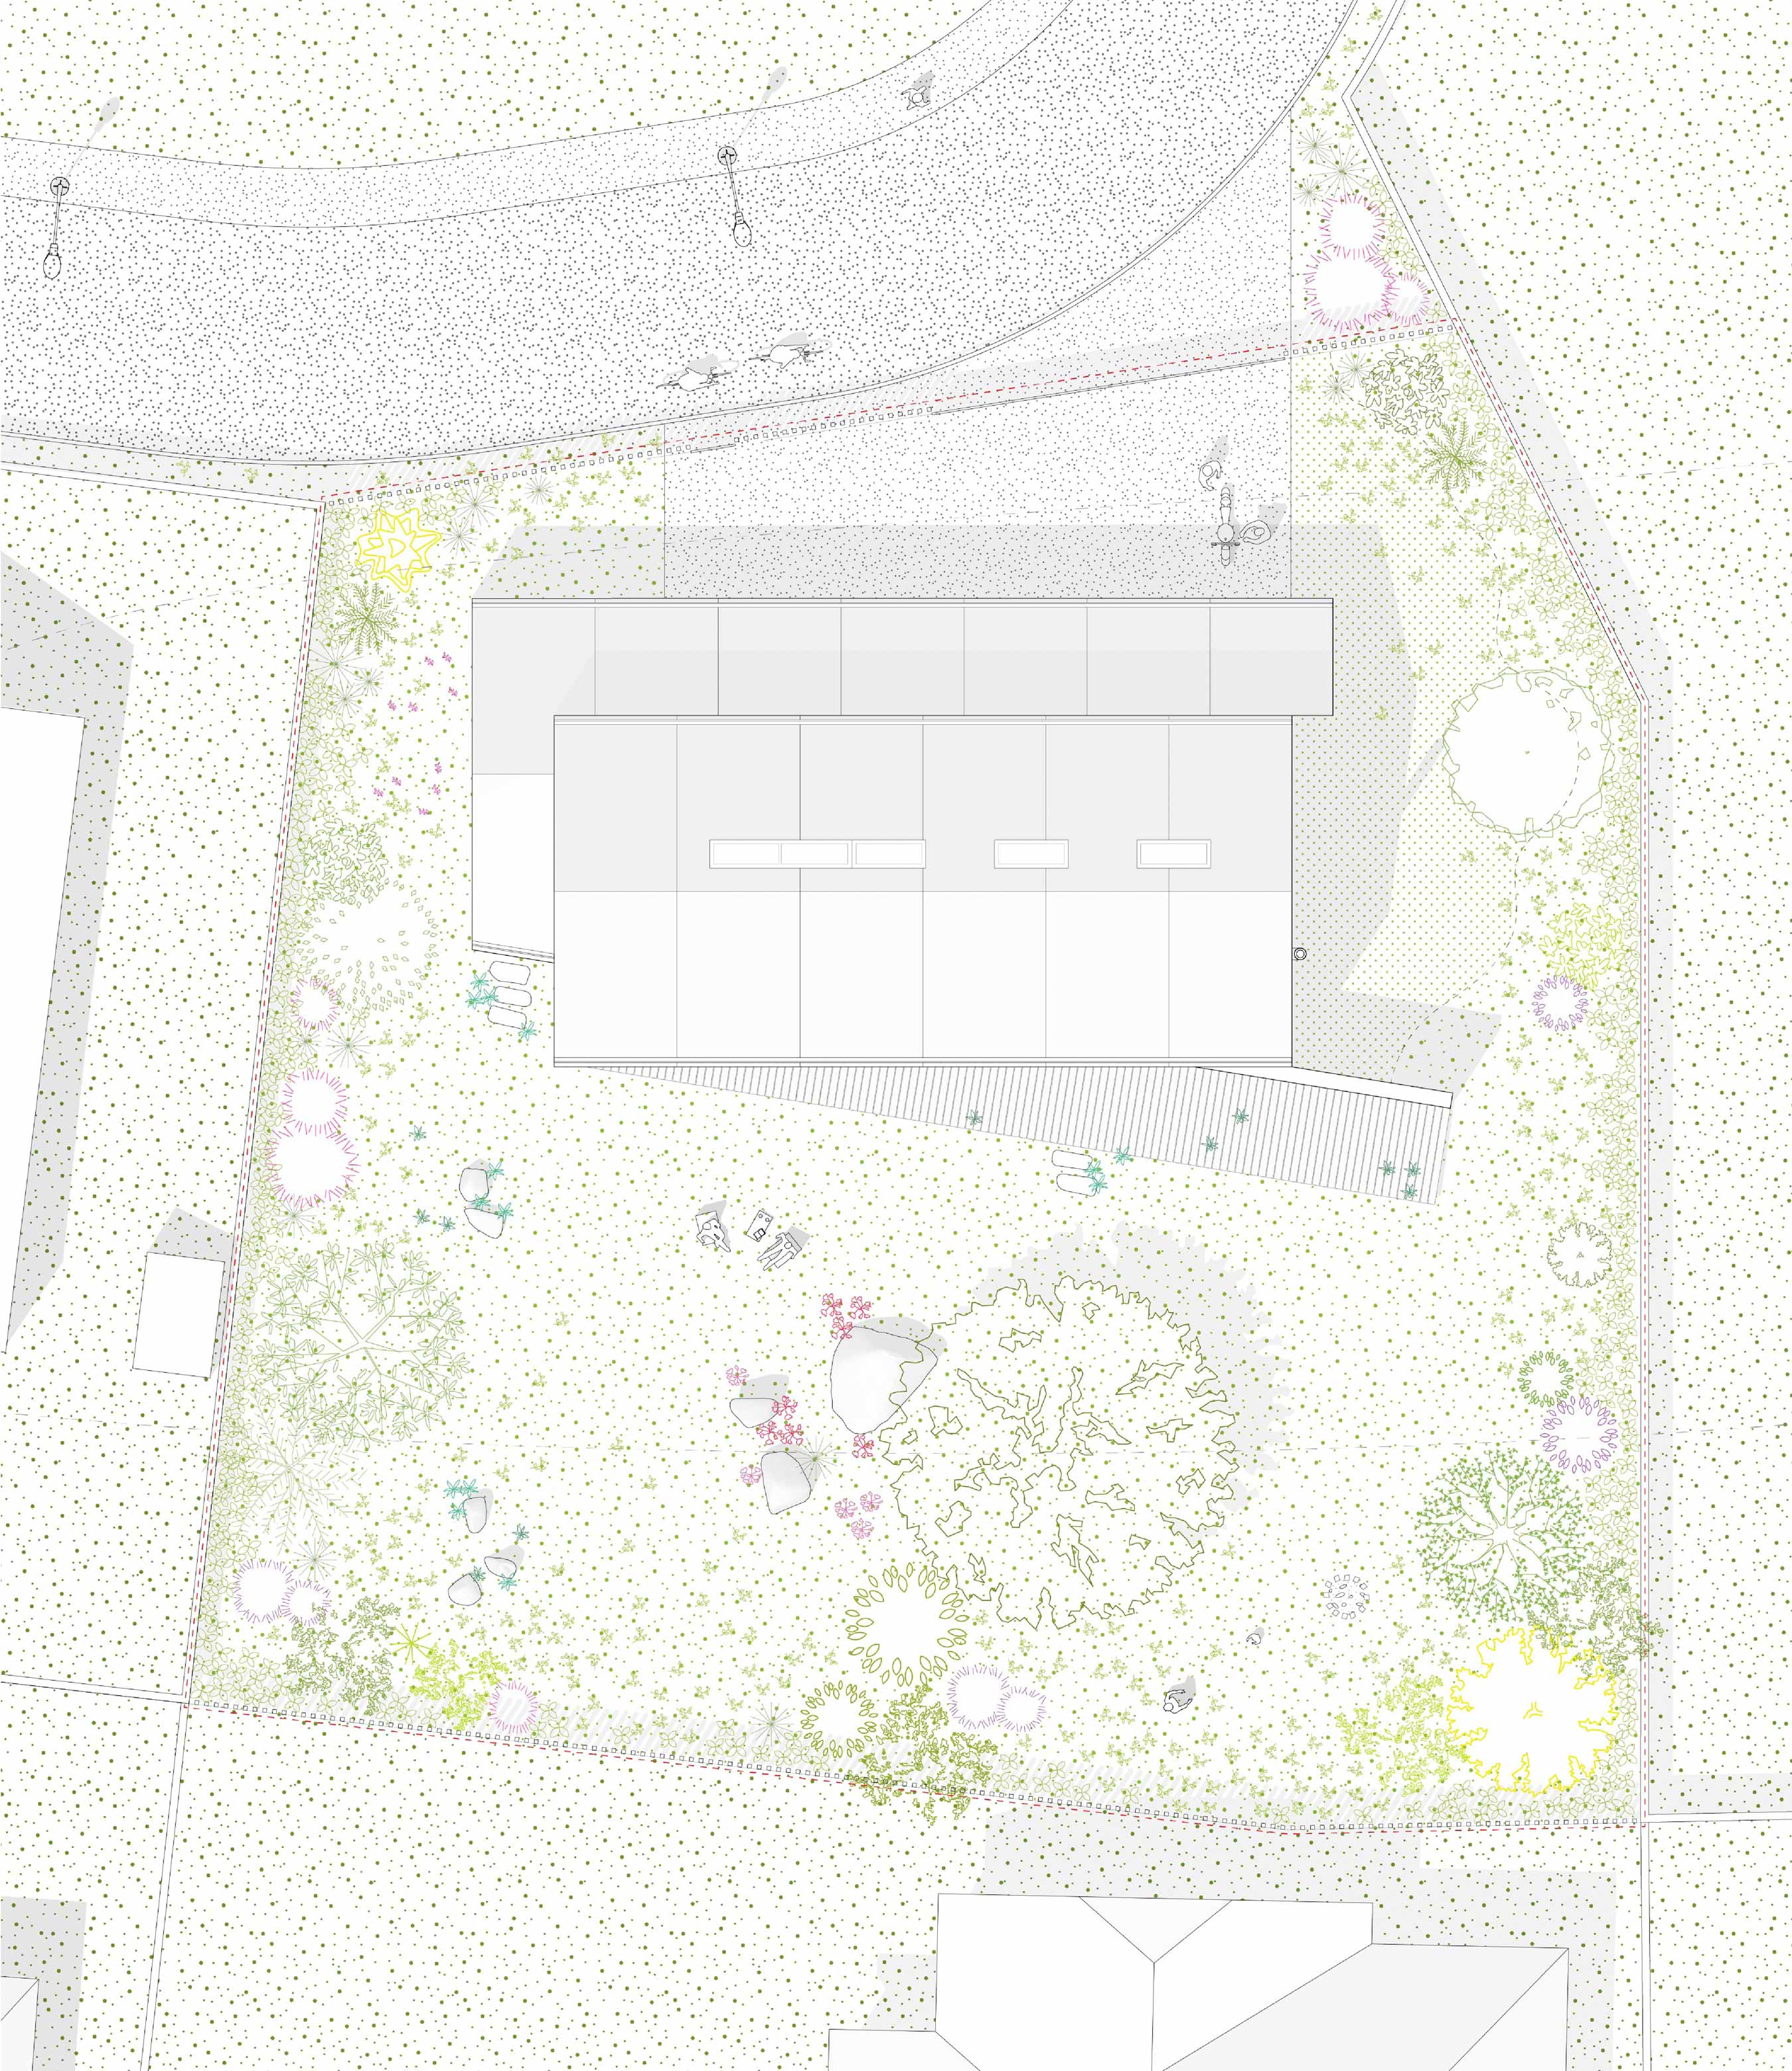 Site plan & garden